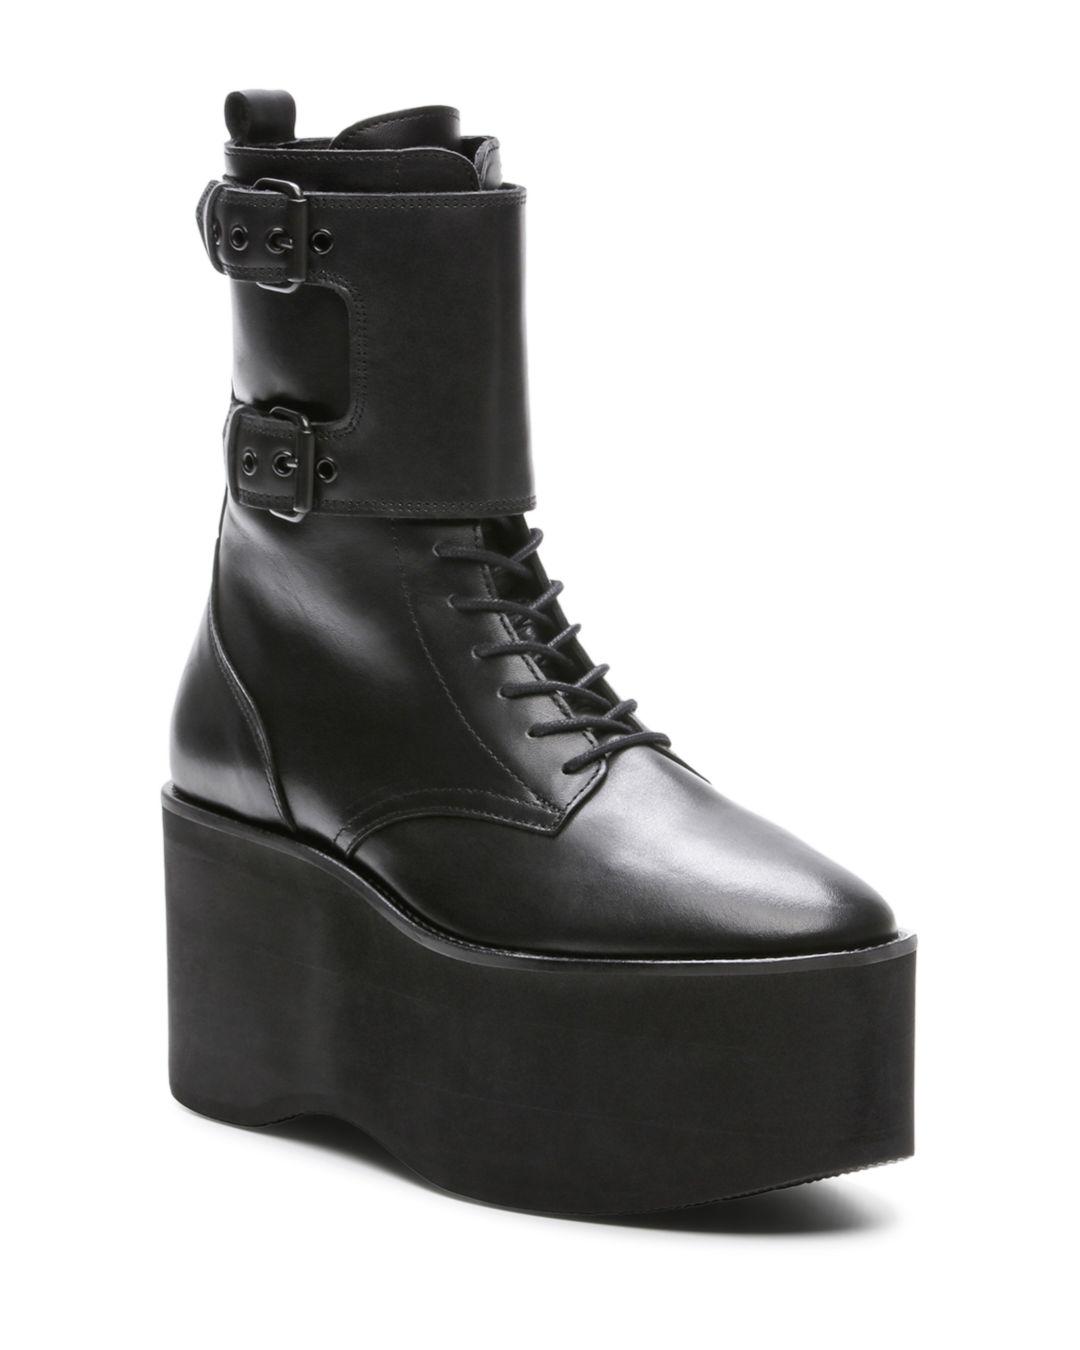 The Kooples Women's Platform Leather Ranger Boots in Black - Lyst